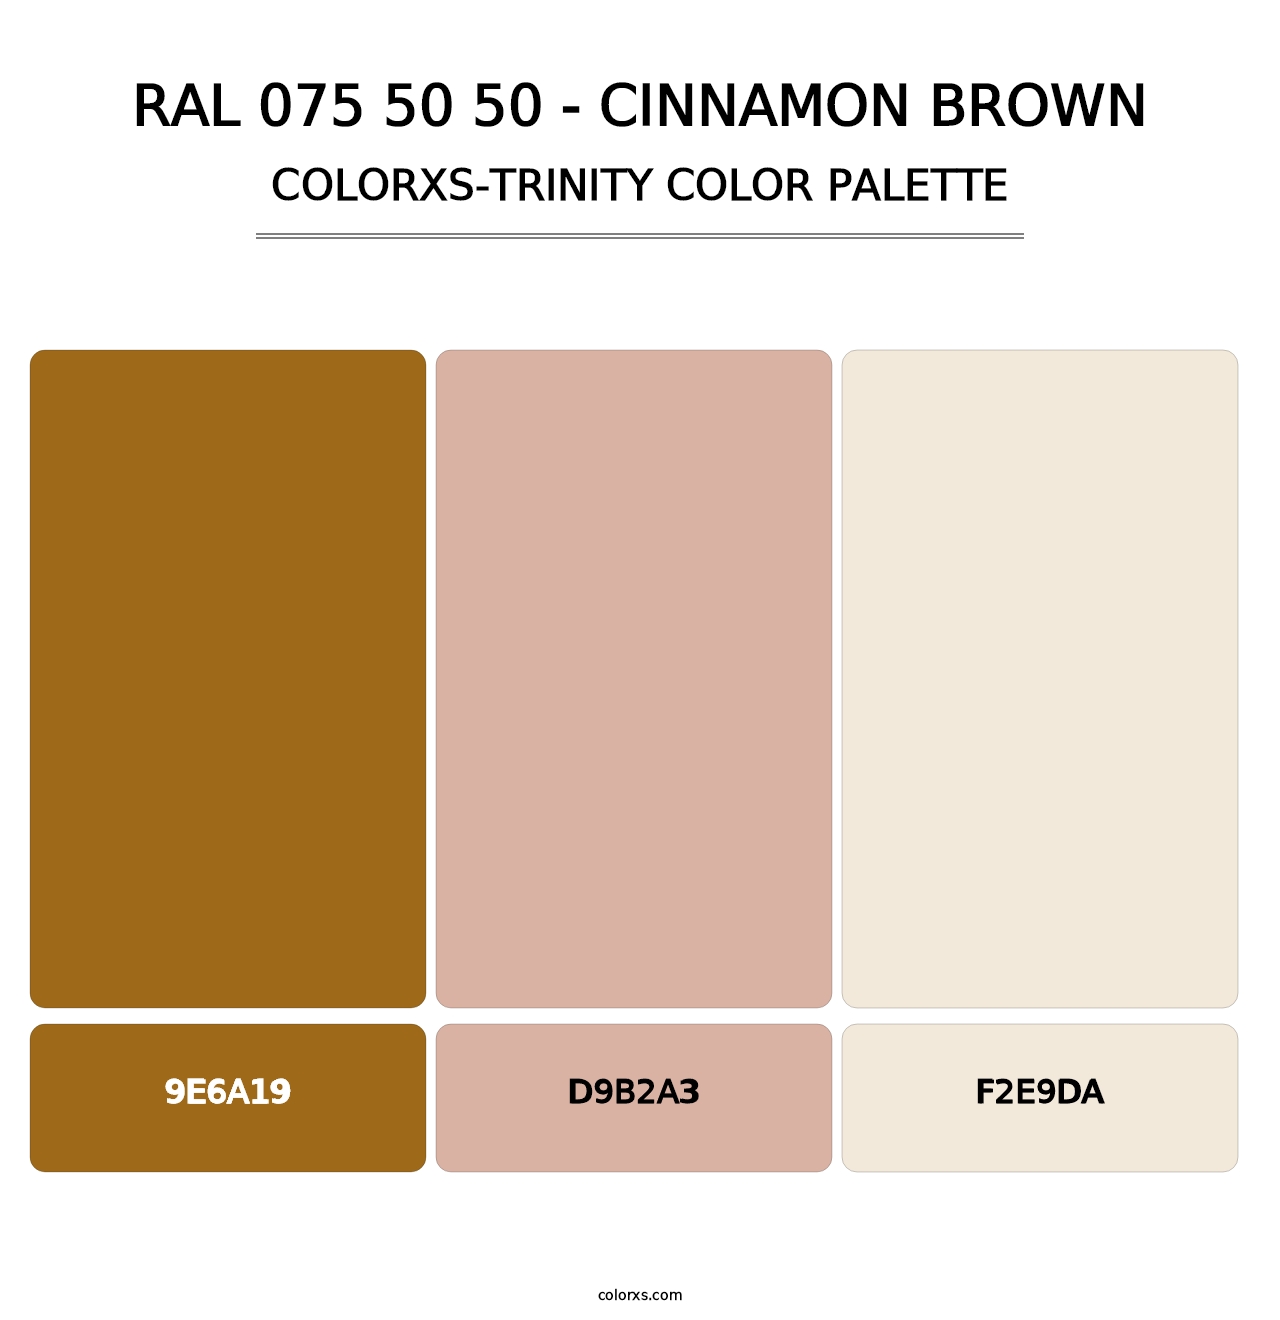 RAL 075 50 50 - Cinnamon Brown - Colorxs Trinity Palette